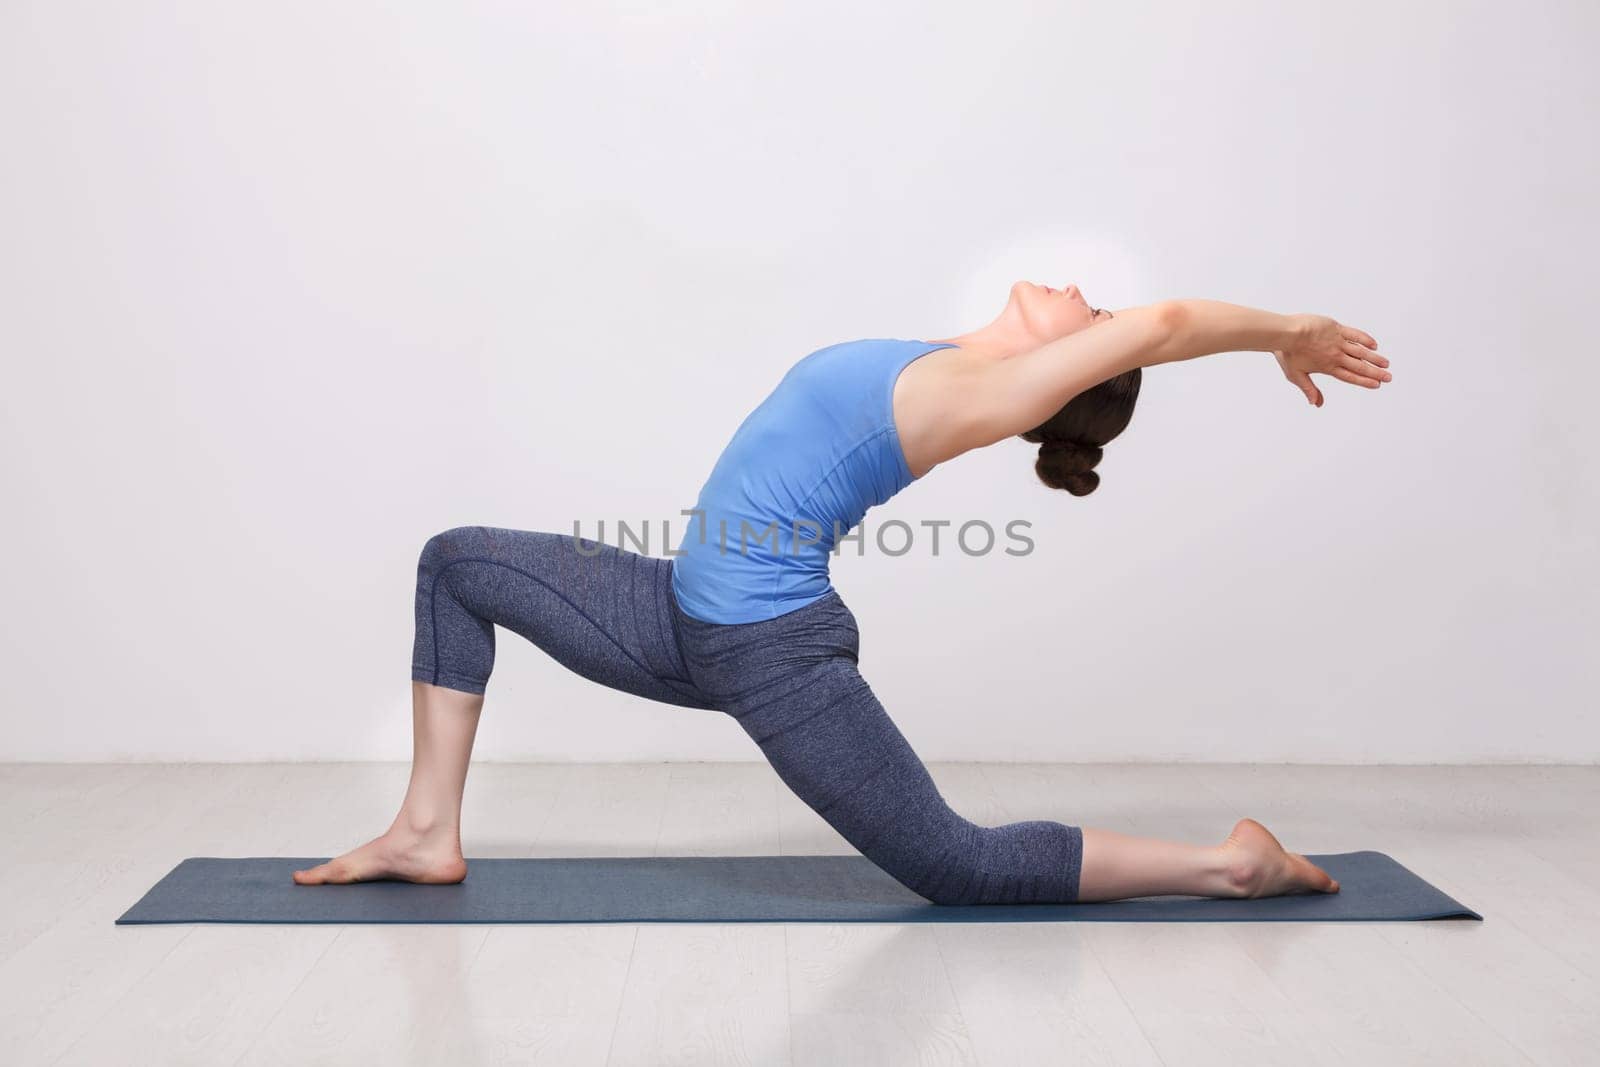 Beautiful sporty fit yogini woman practices yoga asana Anjaneyasana - low crescent lunge pose in surya namaskar in studio